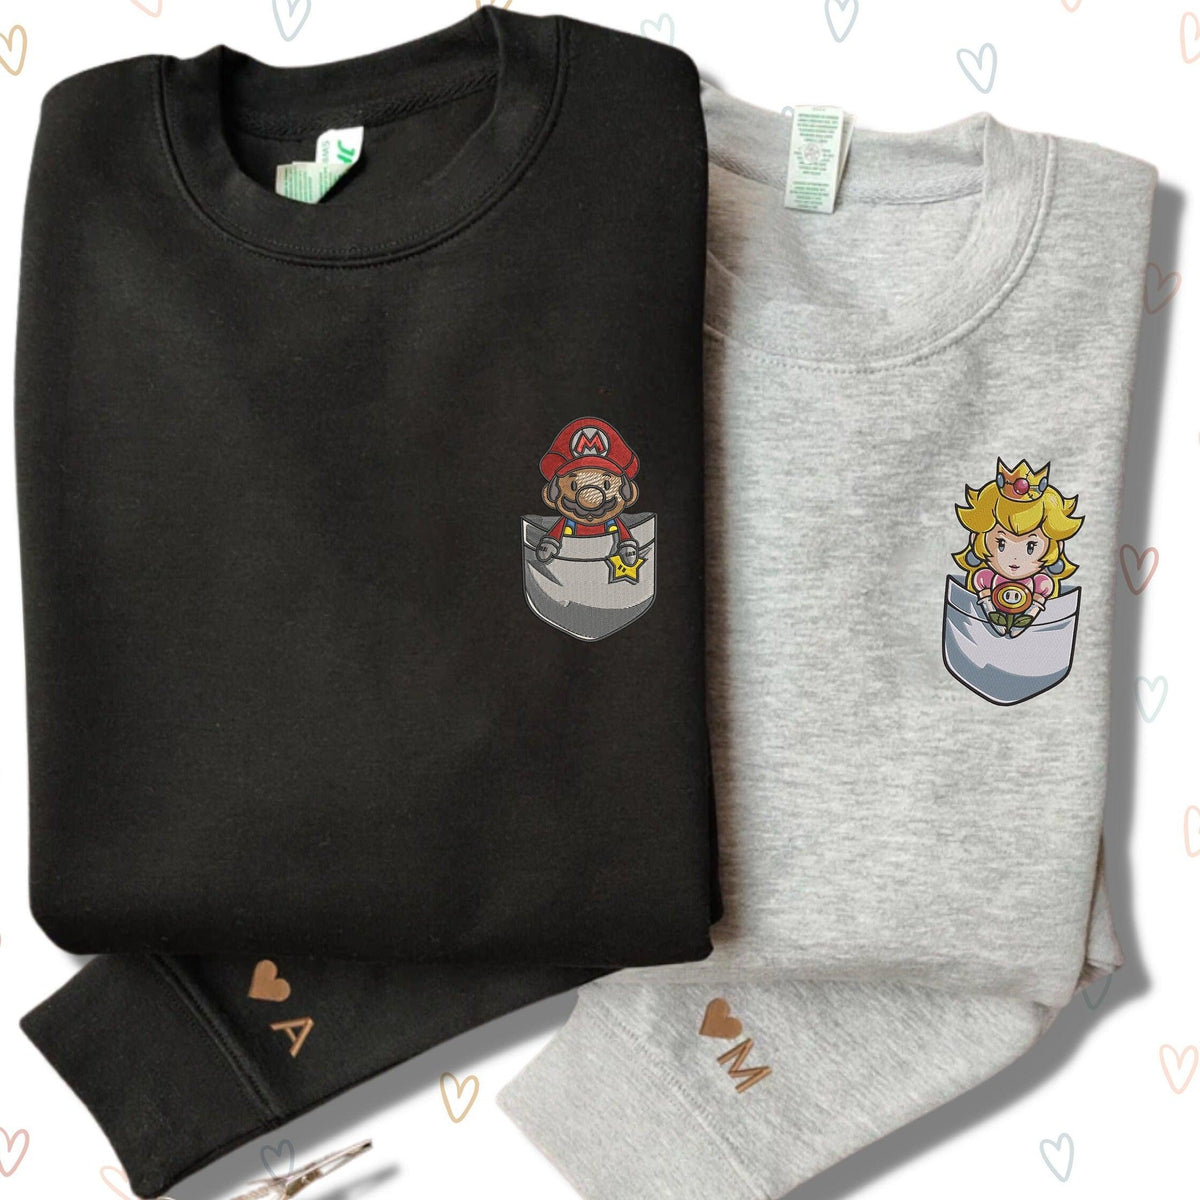 Custom Embroidered Sweatshirts For Couples, Custom Matching Couple Hoodies, Cartoon Mario and Princess Embroidered Matching Couples Sweatshirt